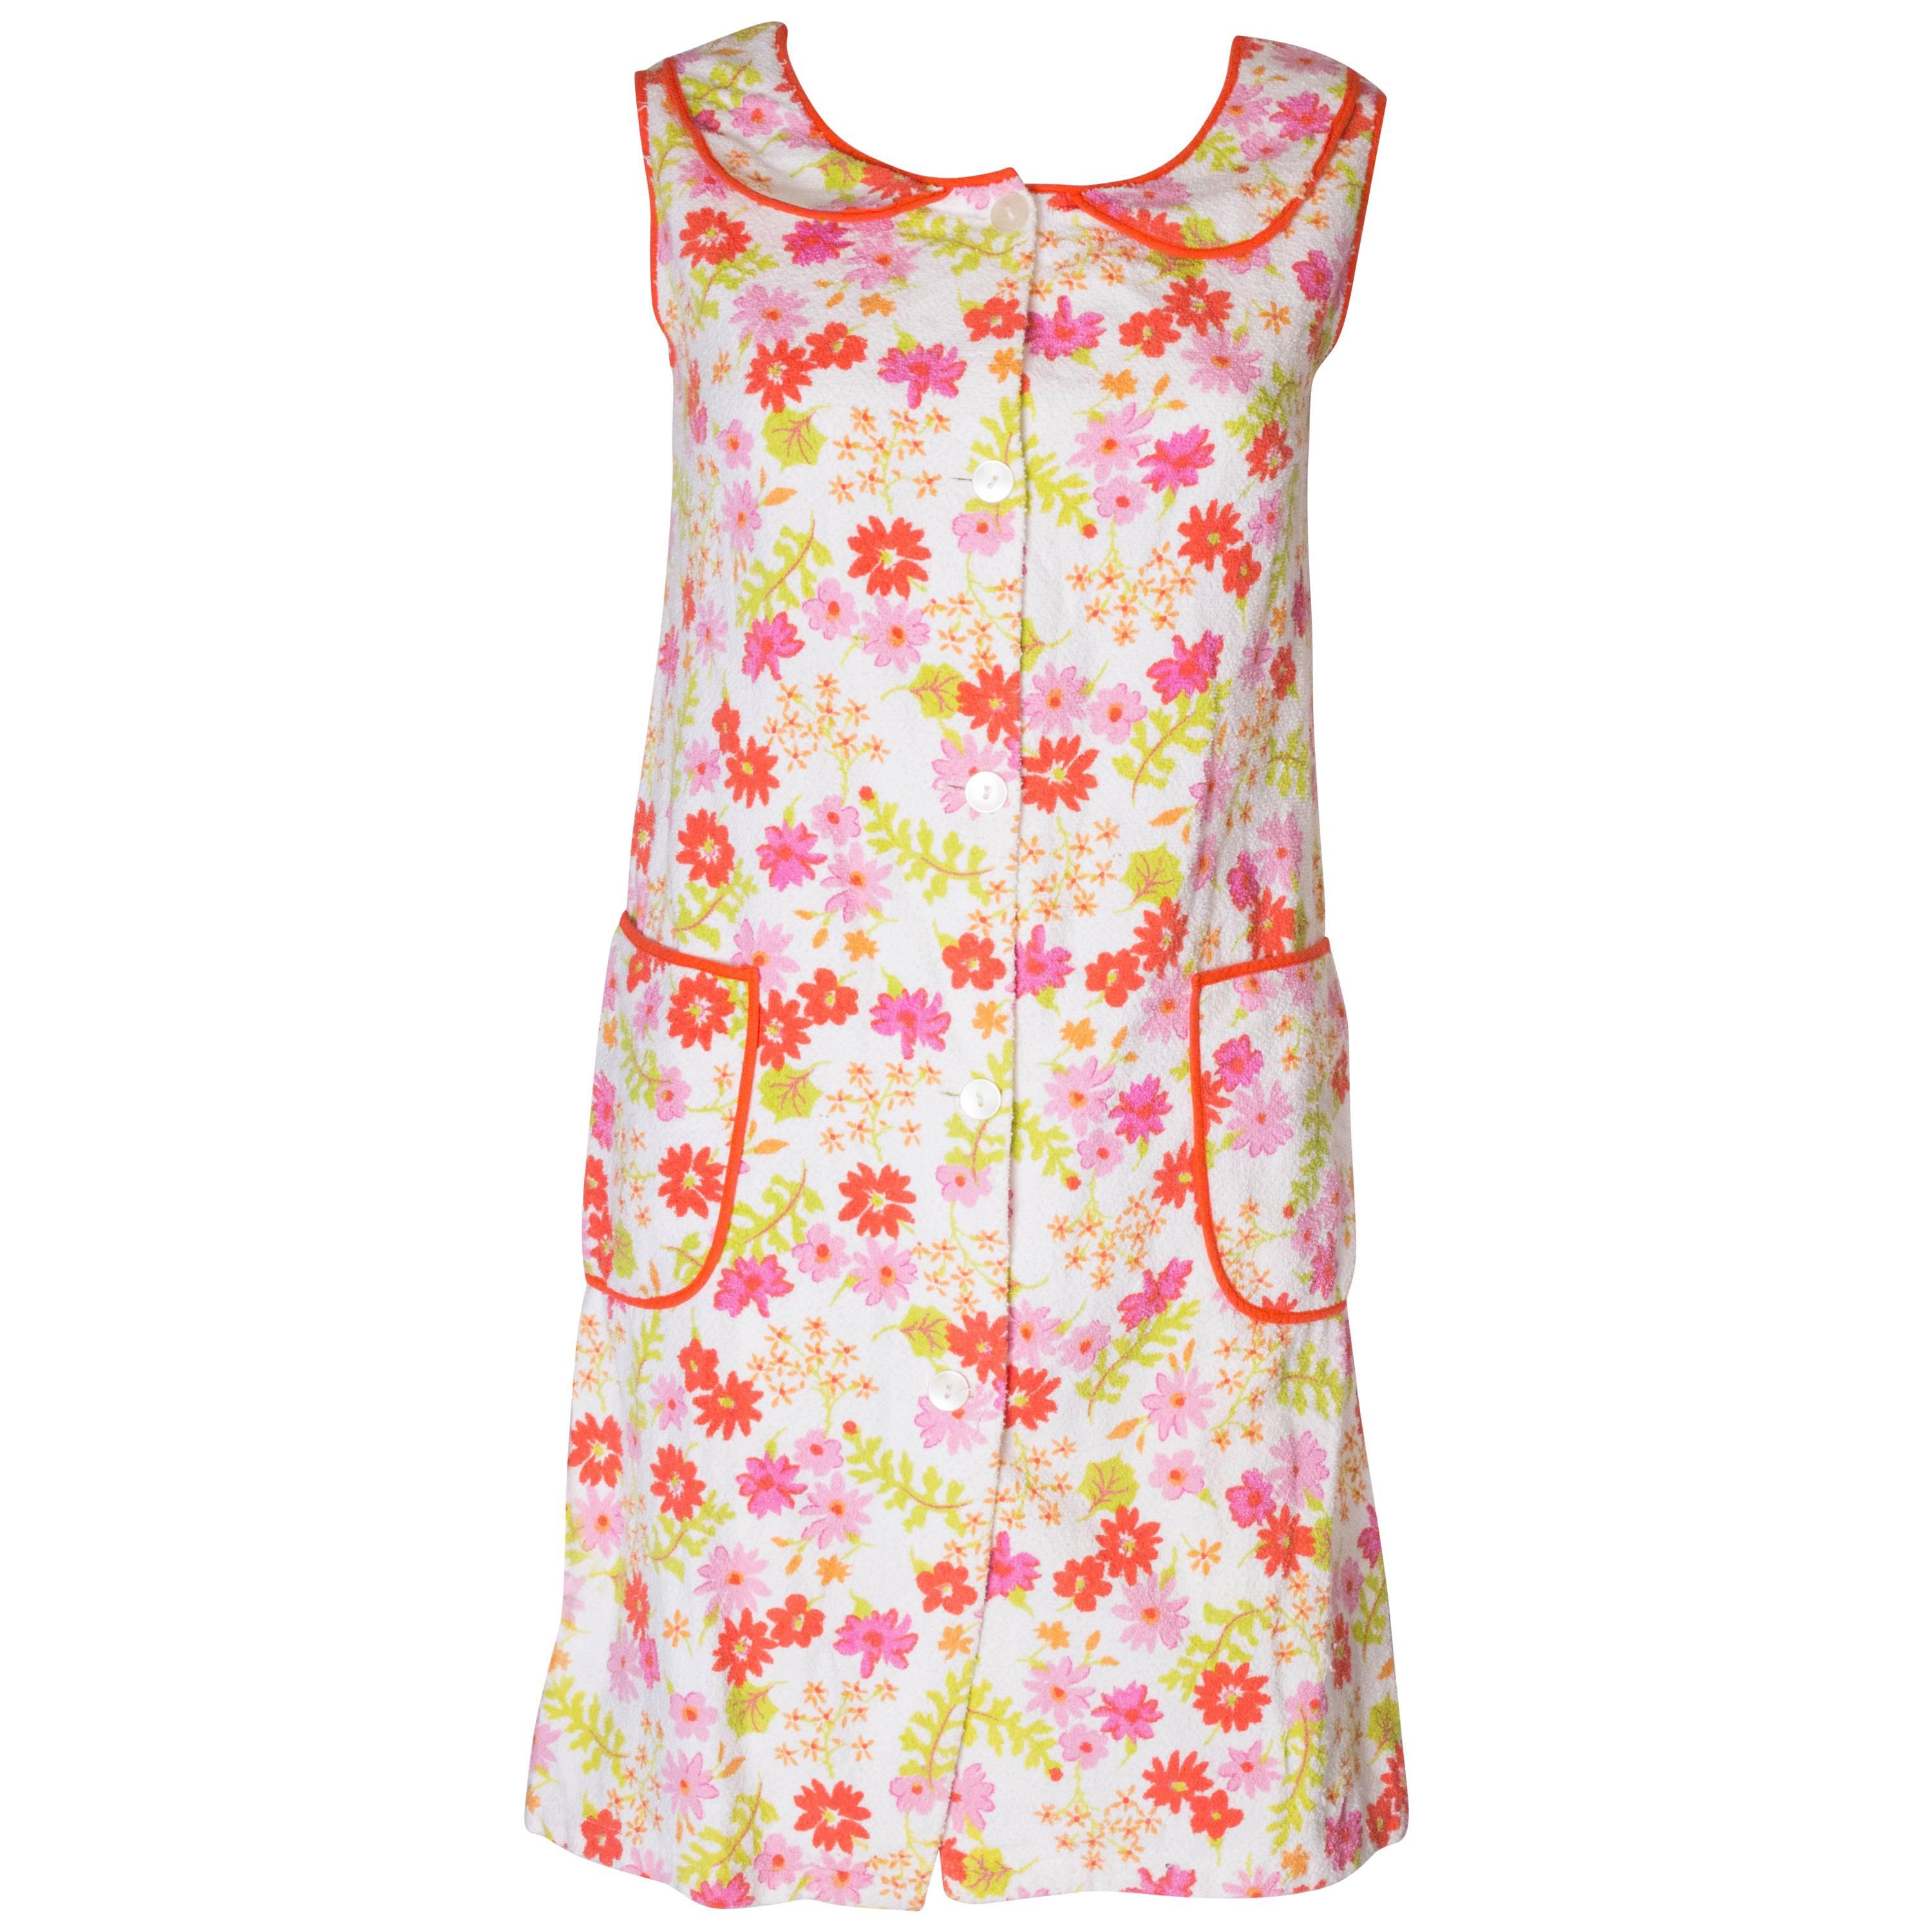 A Vintage 1960s floral printed Towelling summer Dress